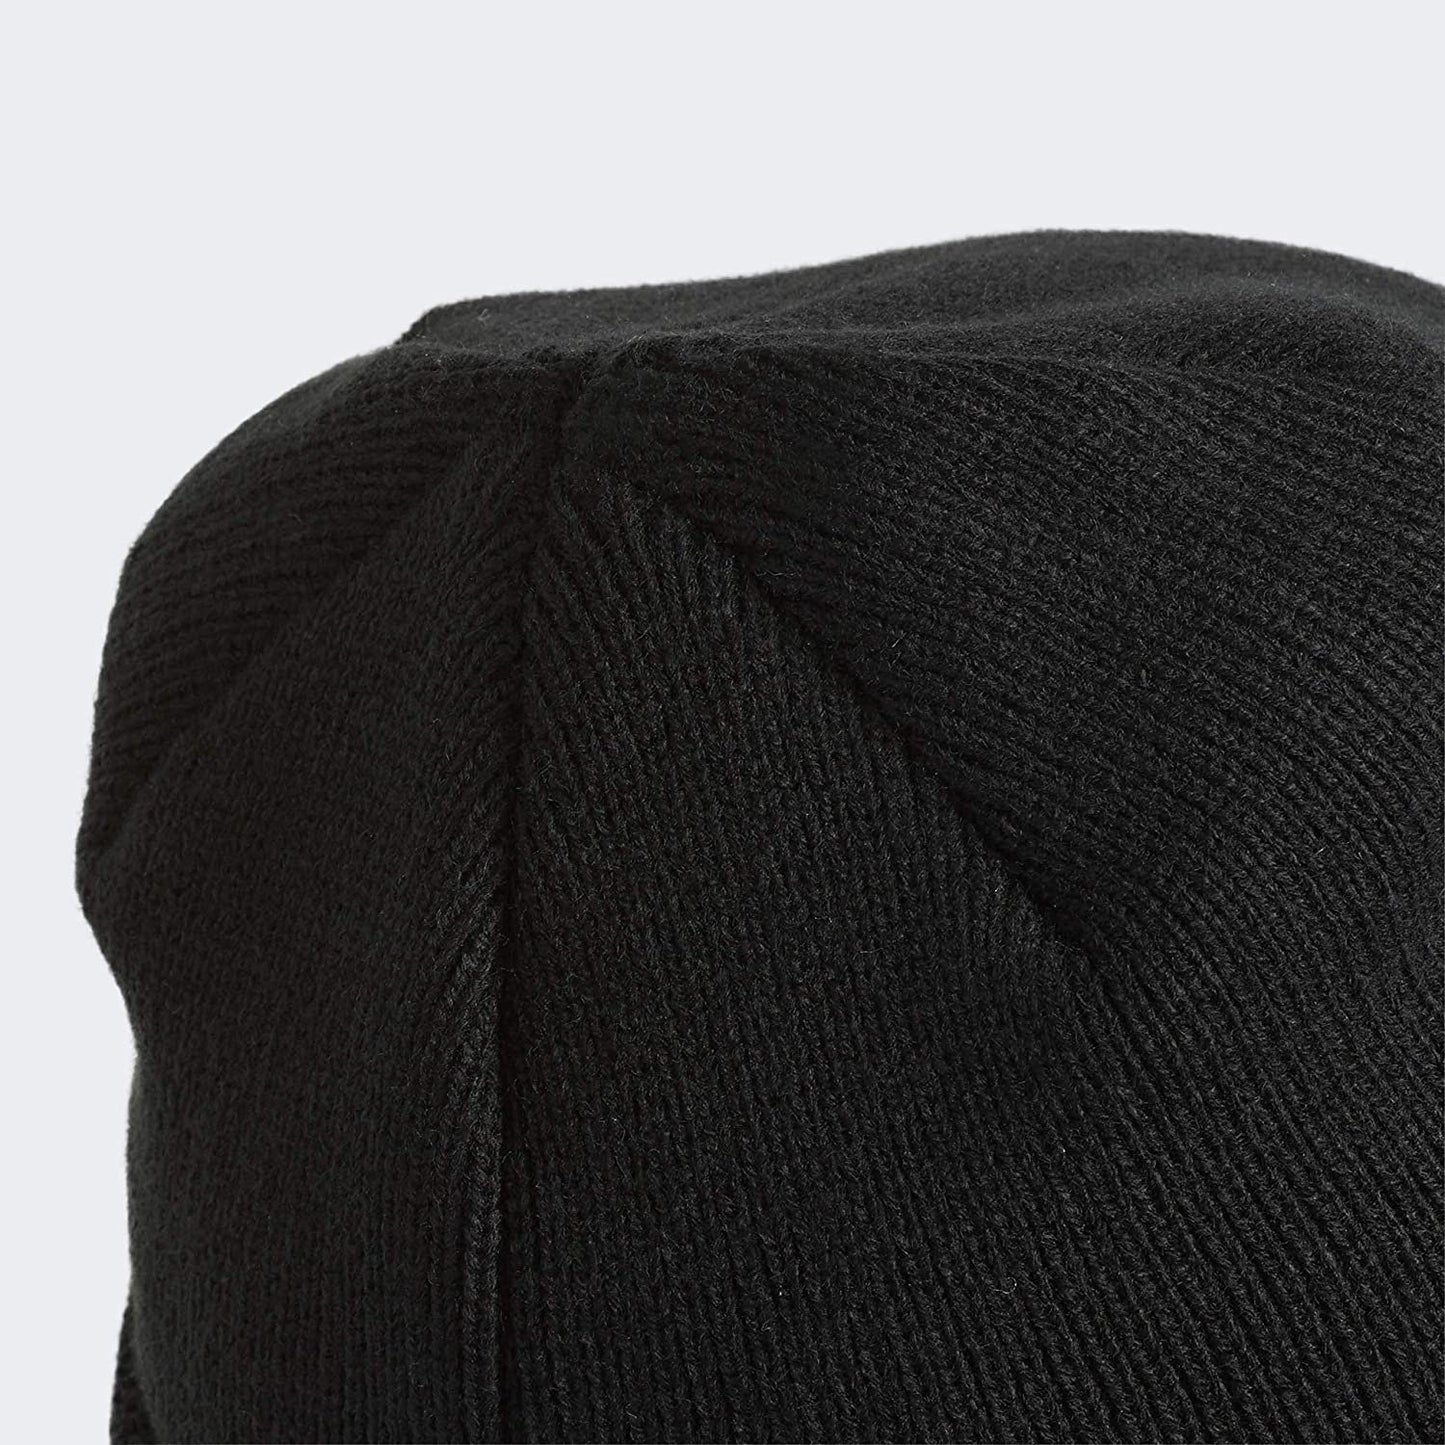 Adidas Originals Trefoil Black/Black Men's Beanie - Becauze